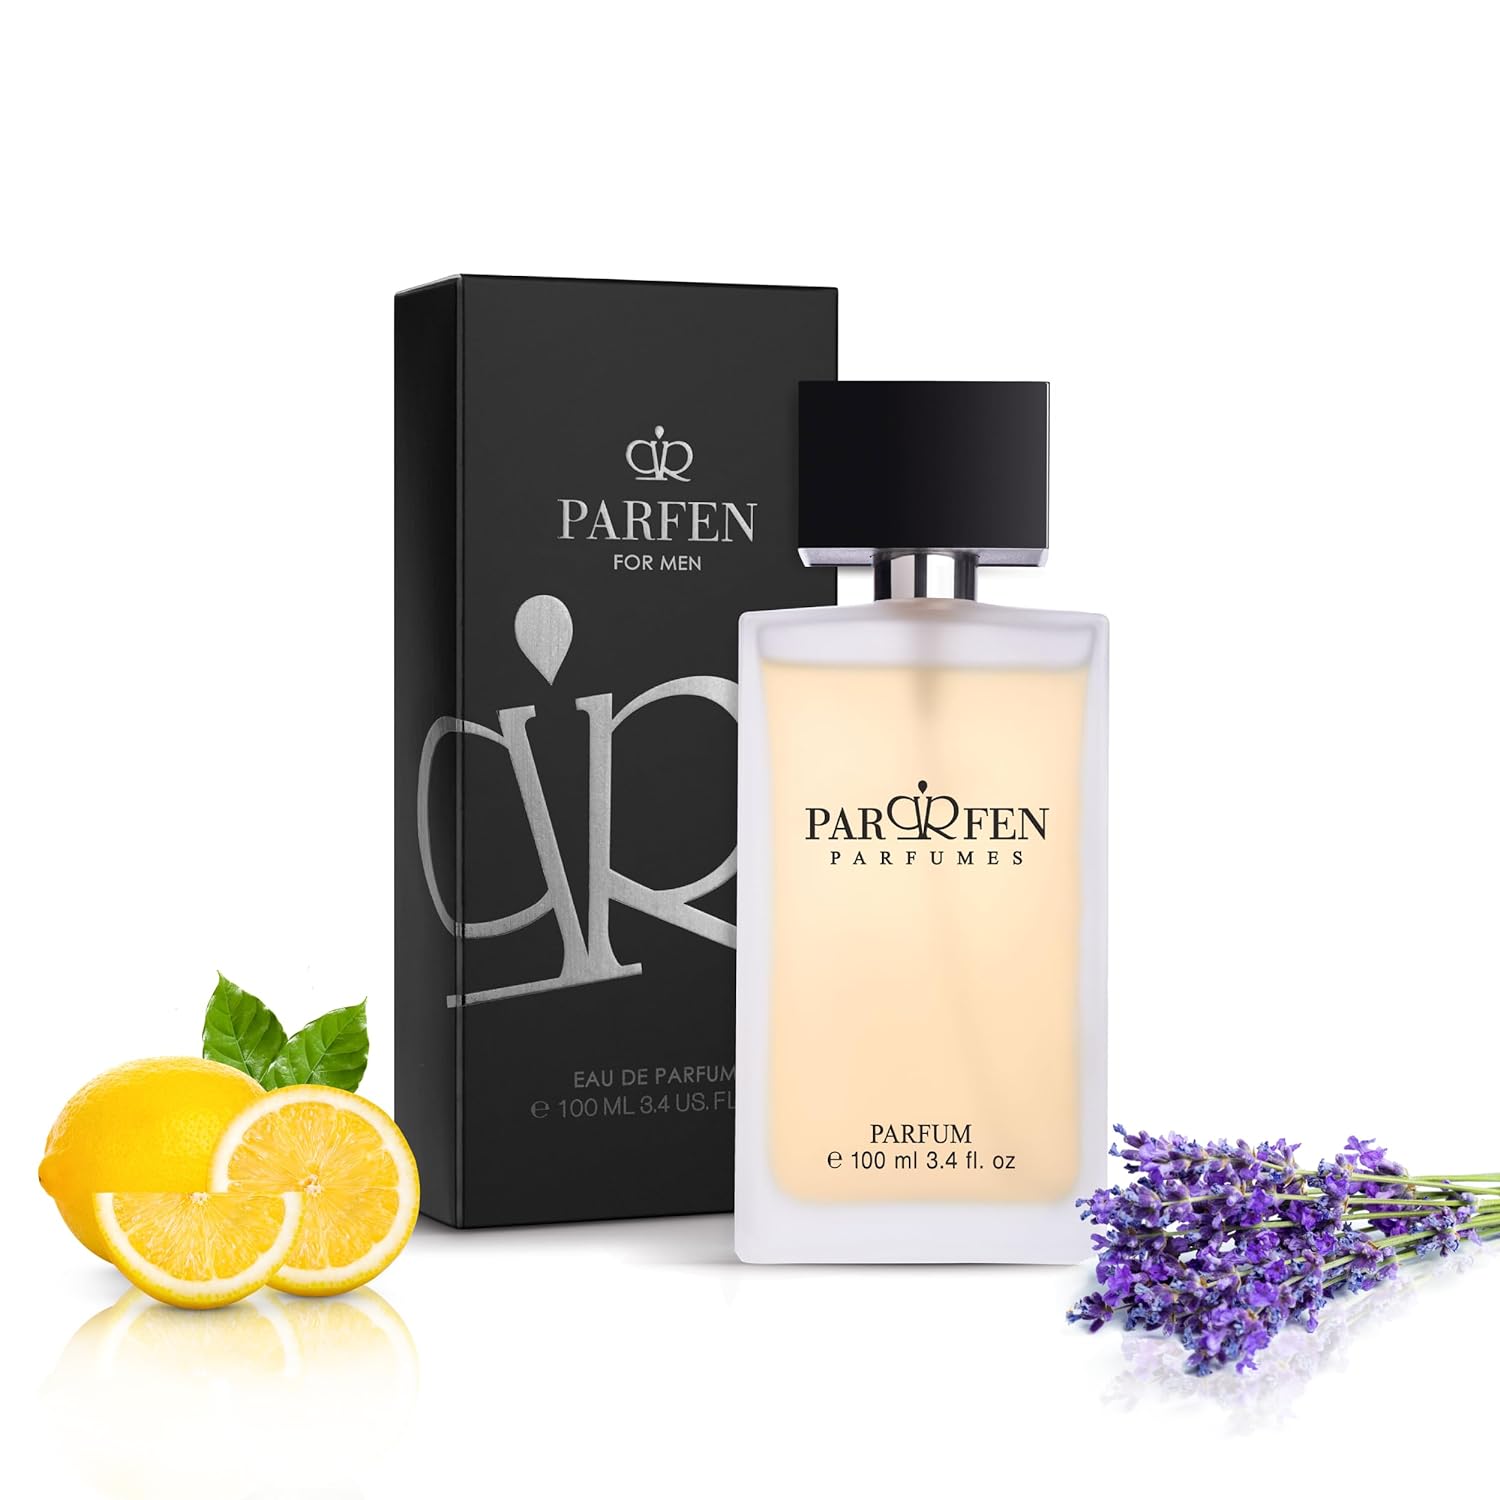 PARFEN No. 420 - PANTOMAS - Eau de Parfum for Men 30 ml - Highly Concentrated Men's Fragrance with Fragrances from France, Analogue Perfume Men